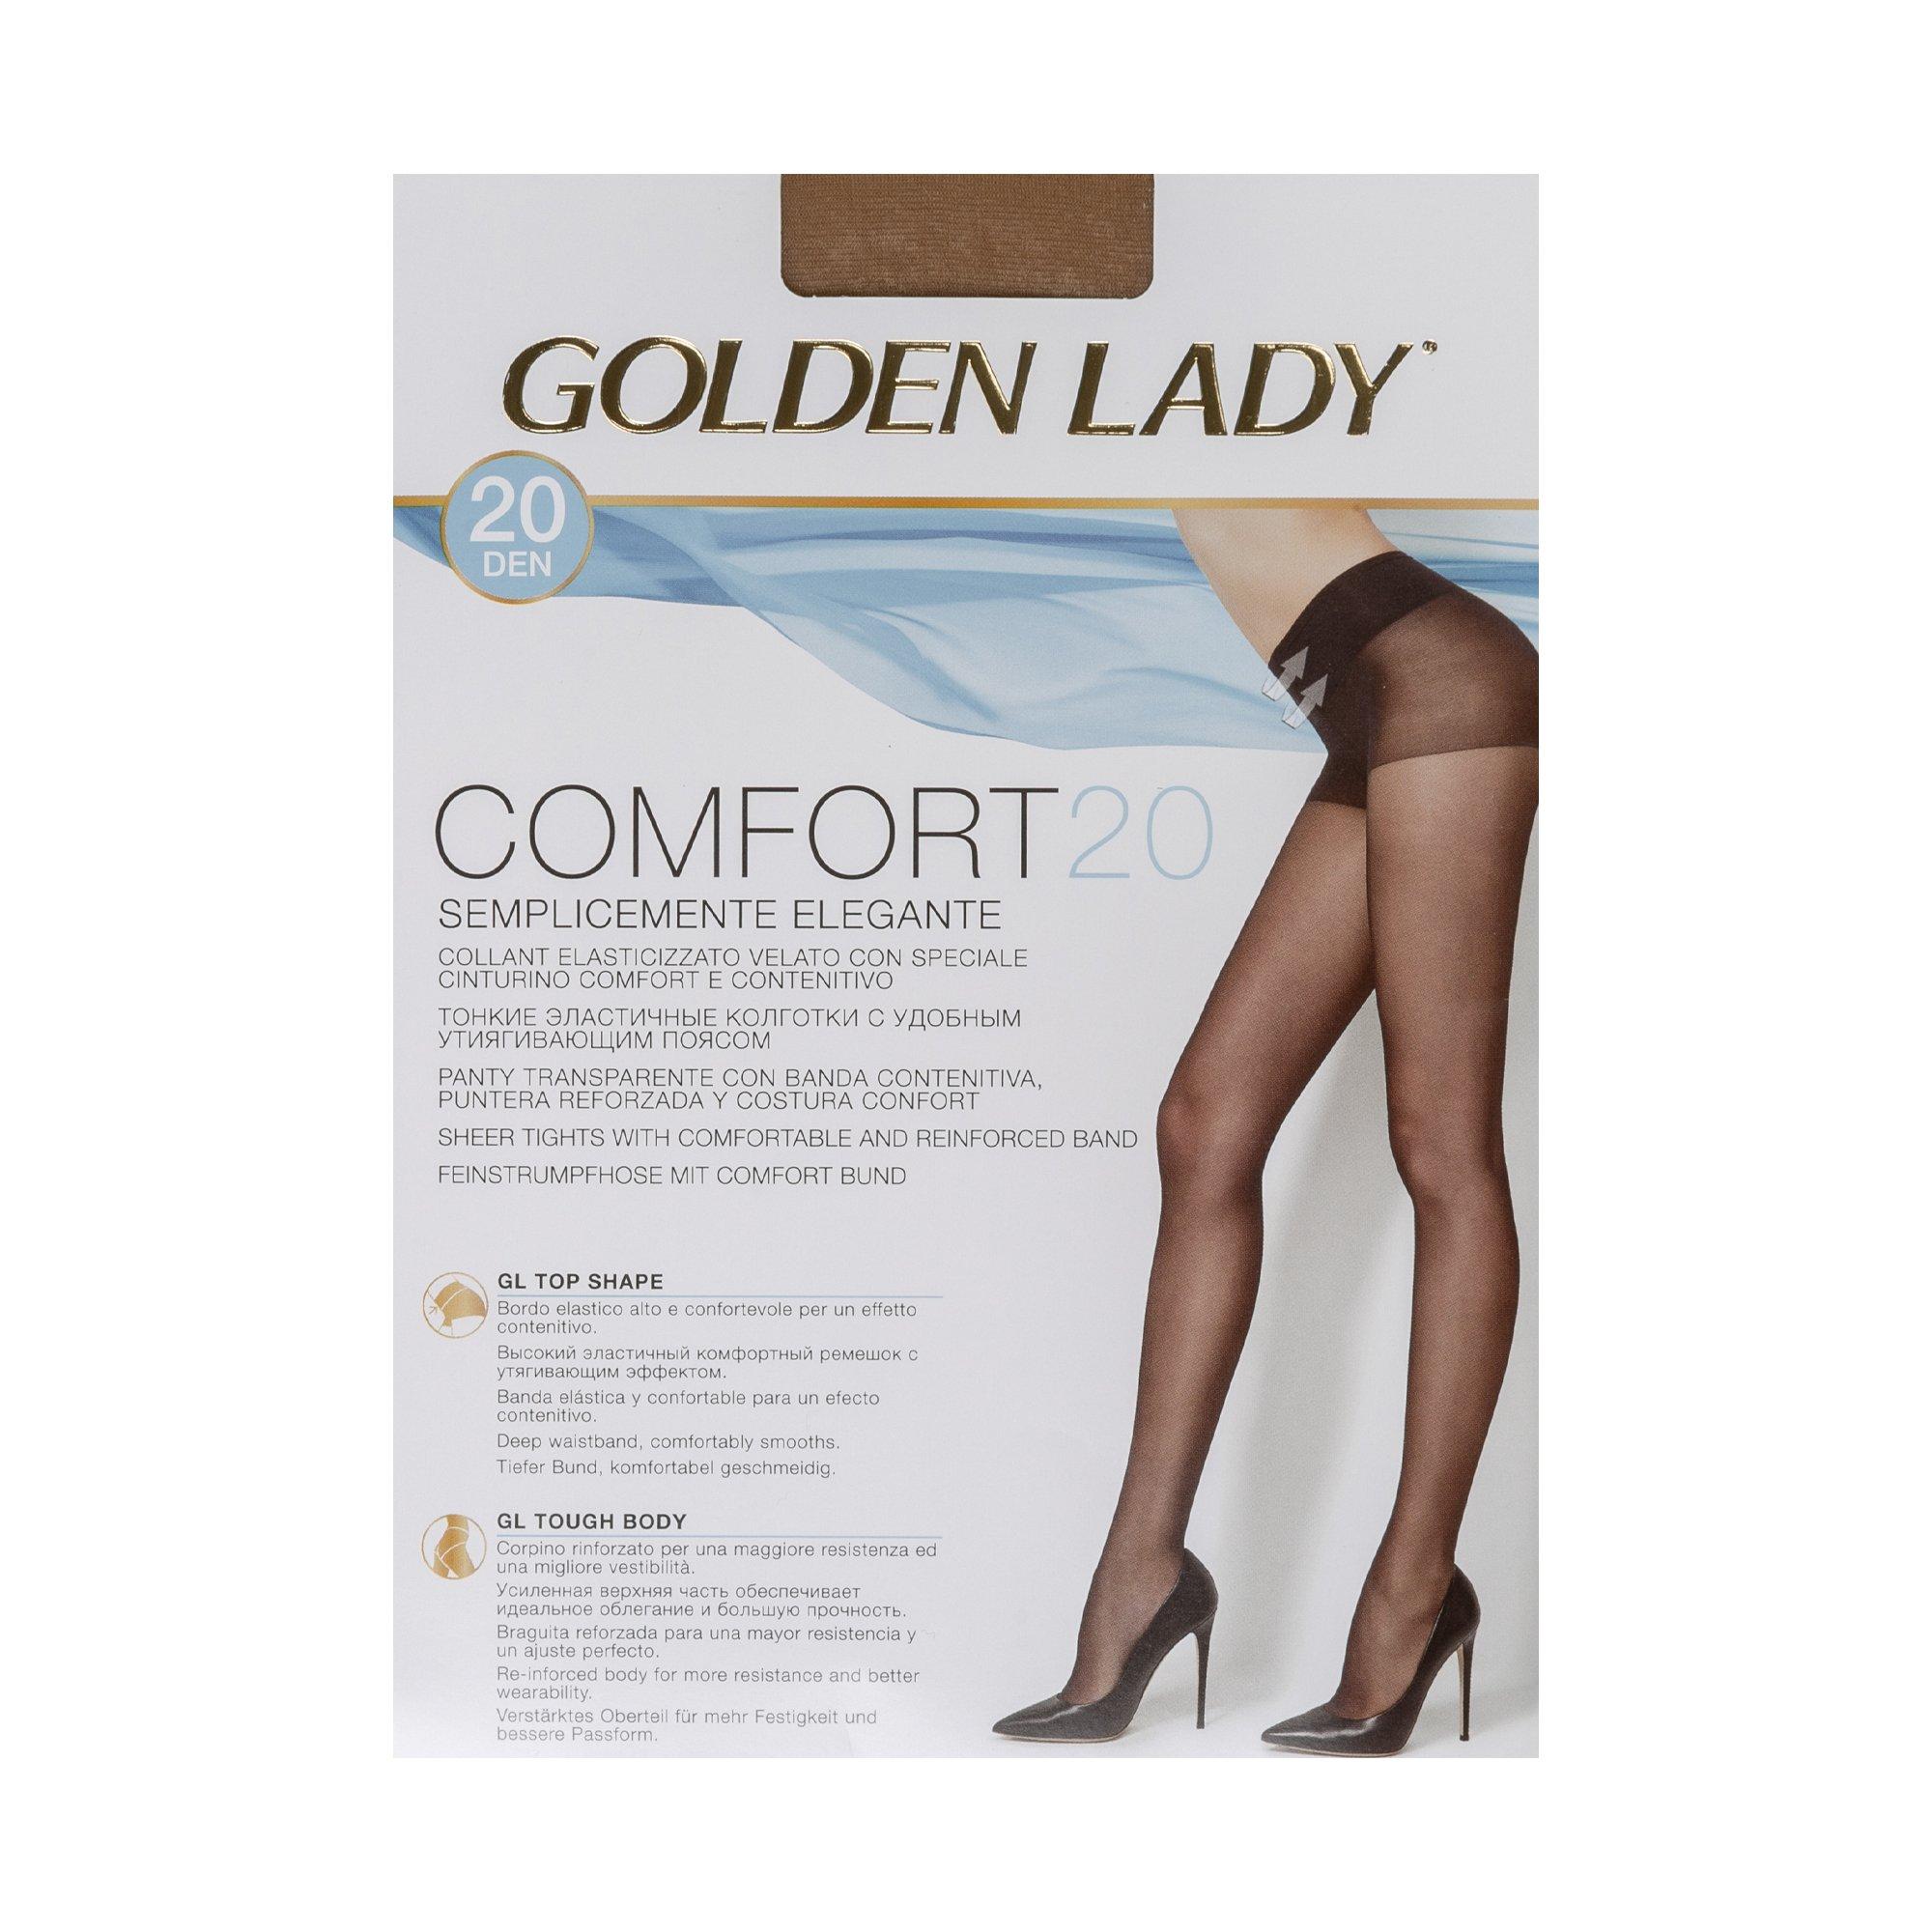 GOLDEN LADY Comfort 20 Collant, 20 Denari 